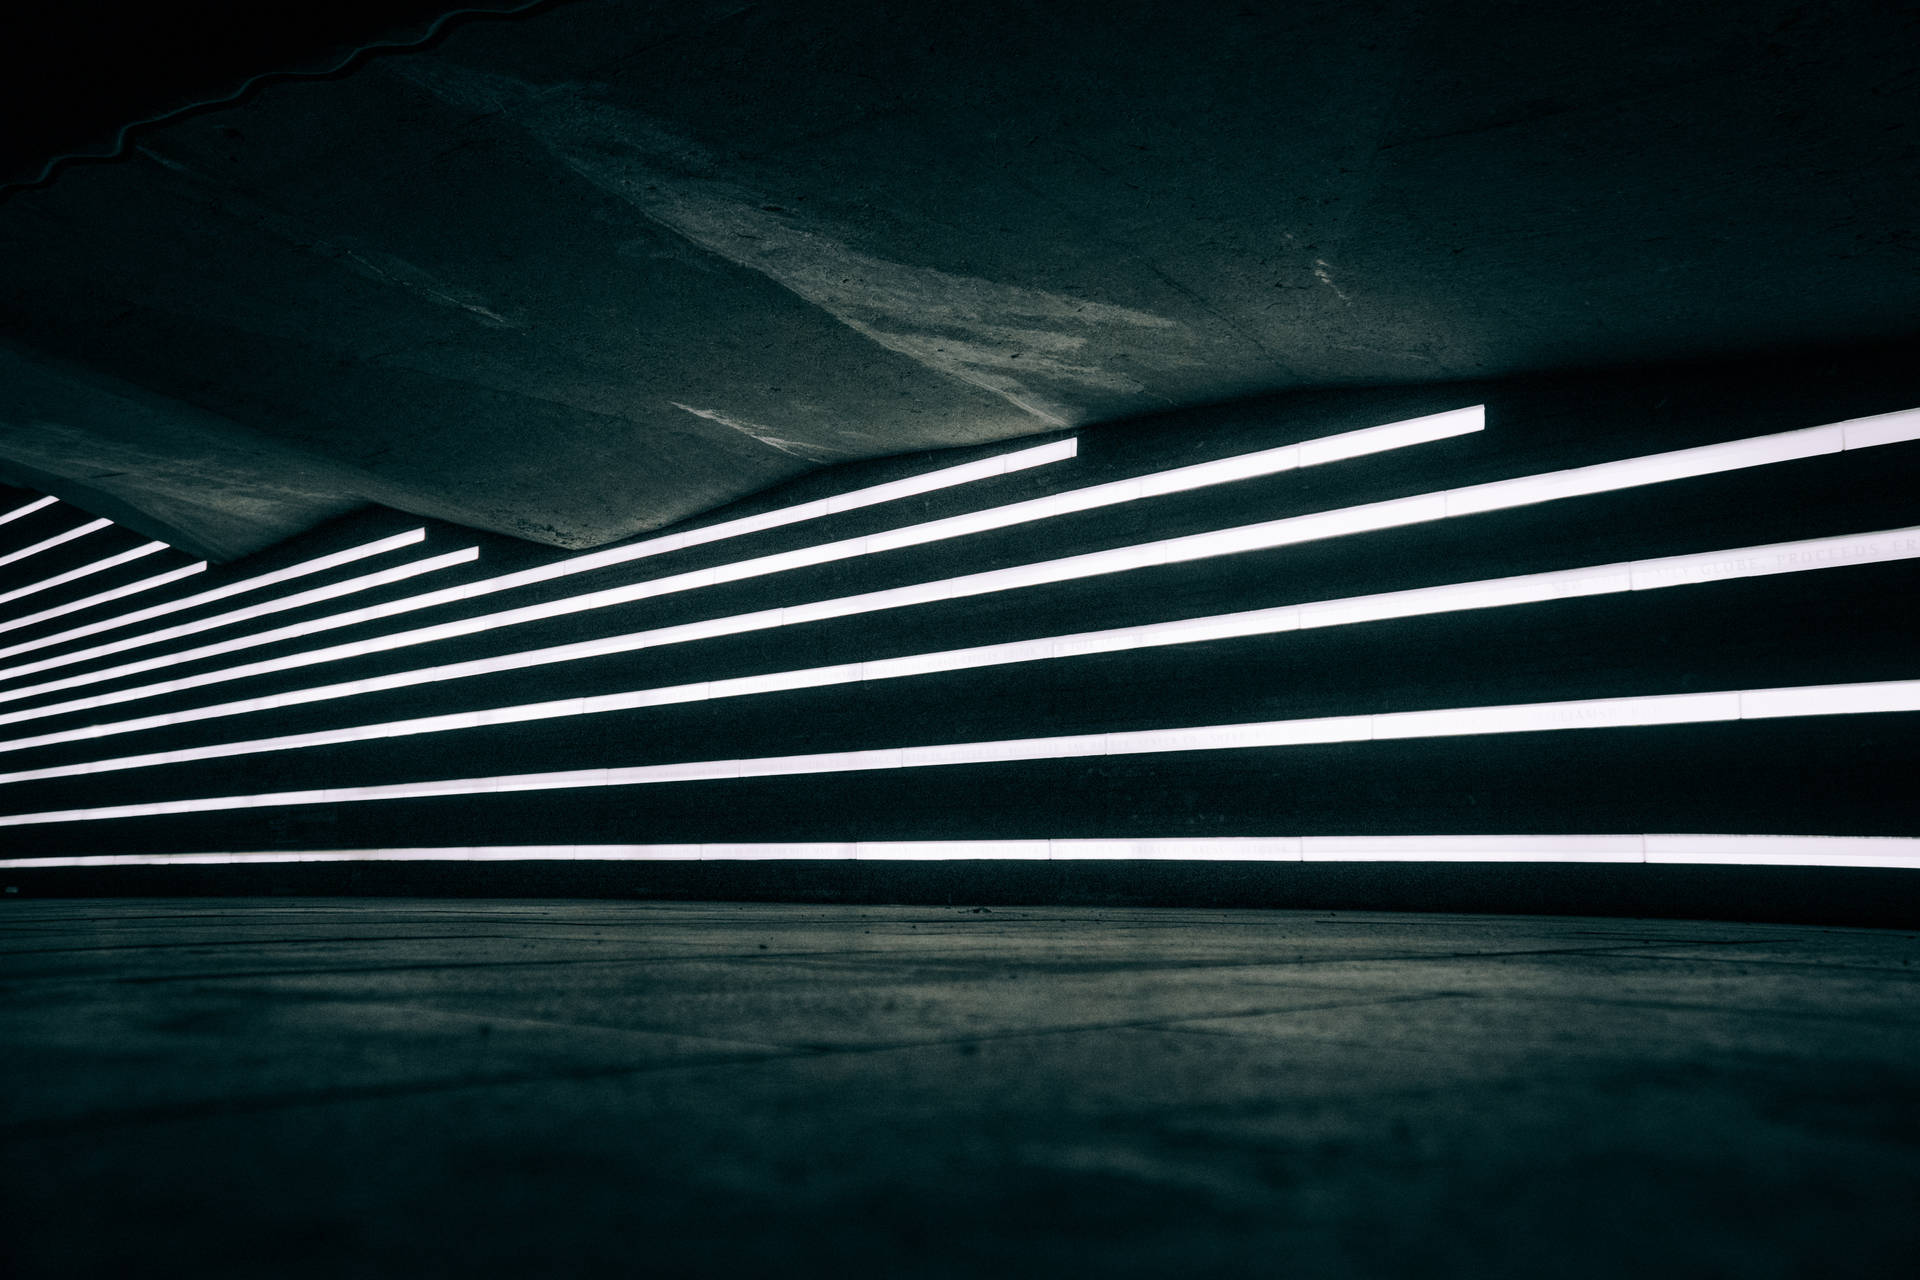 Underground Concrete With Neon Lights